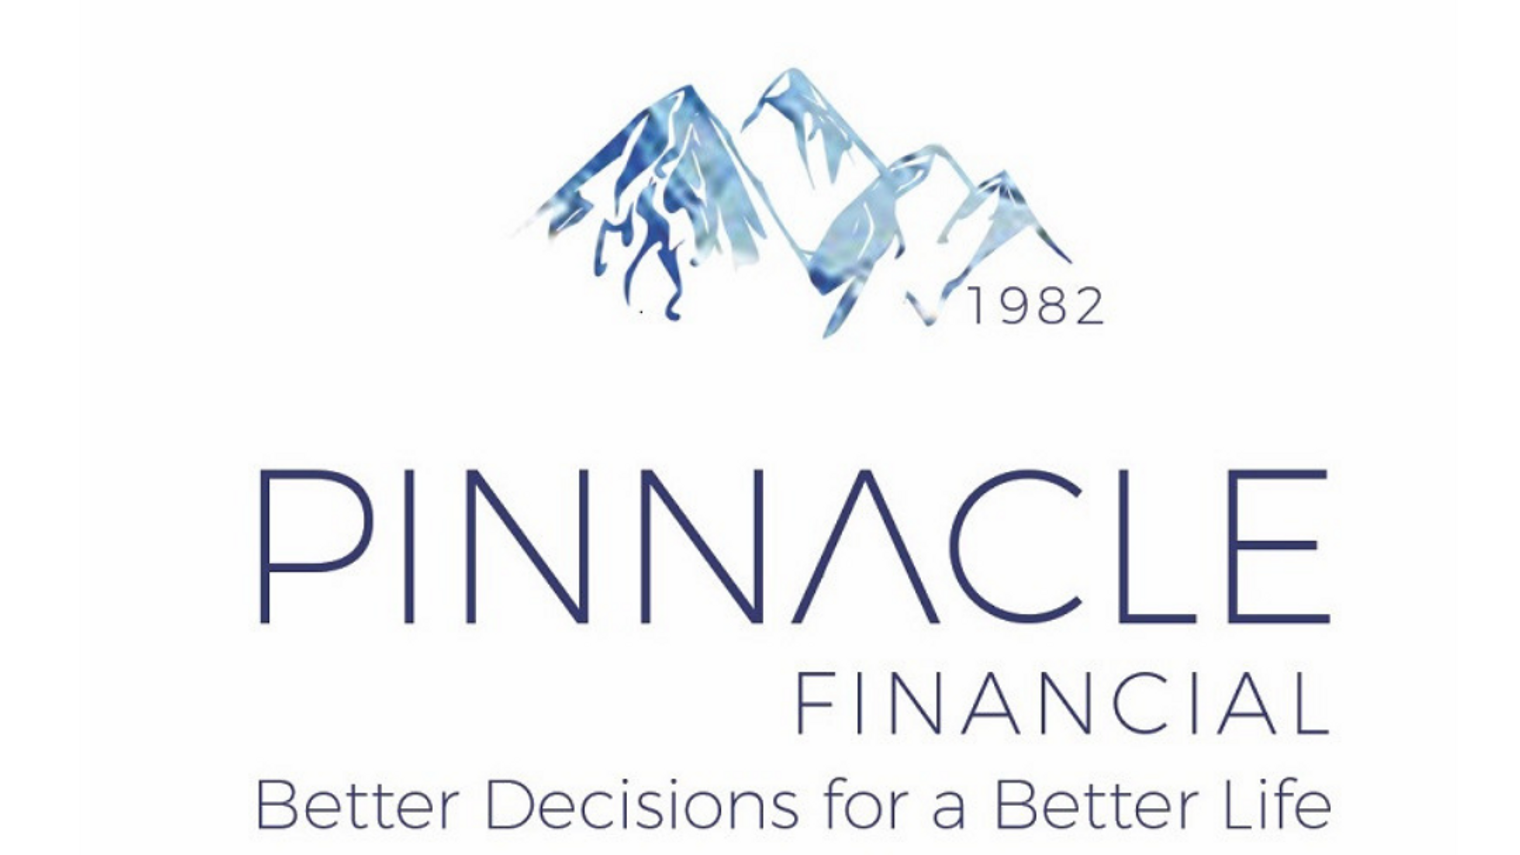 Pinnacle Financial Ireland